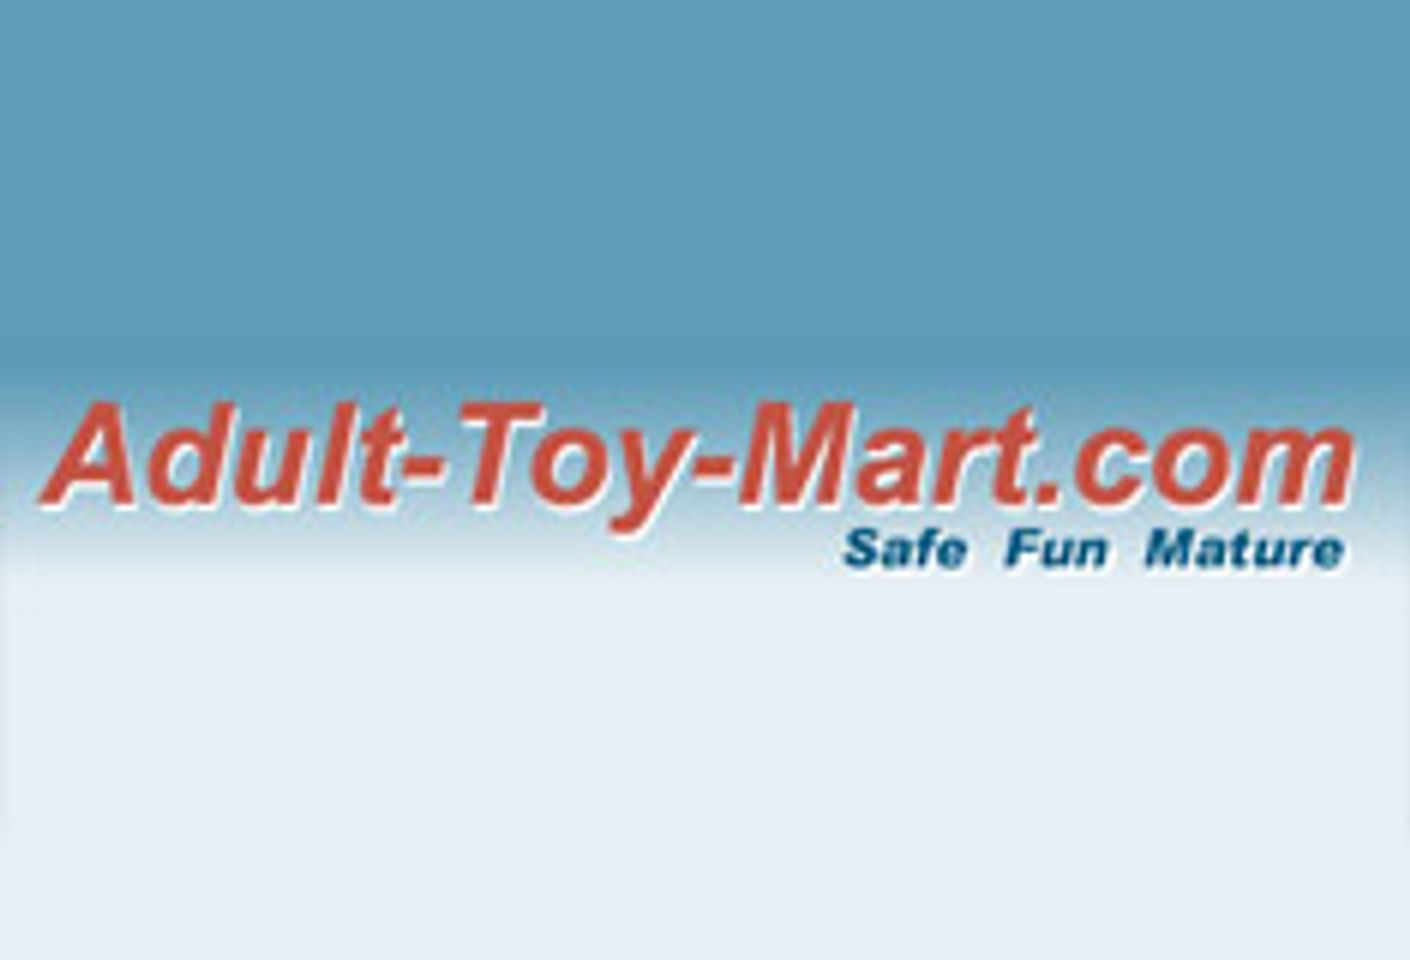 Adult-Toy-Mart.com Introduces Infinite Rewards